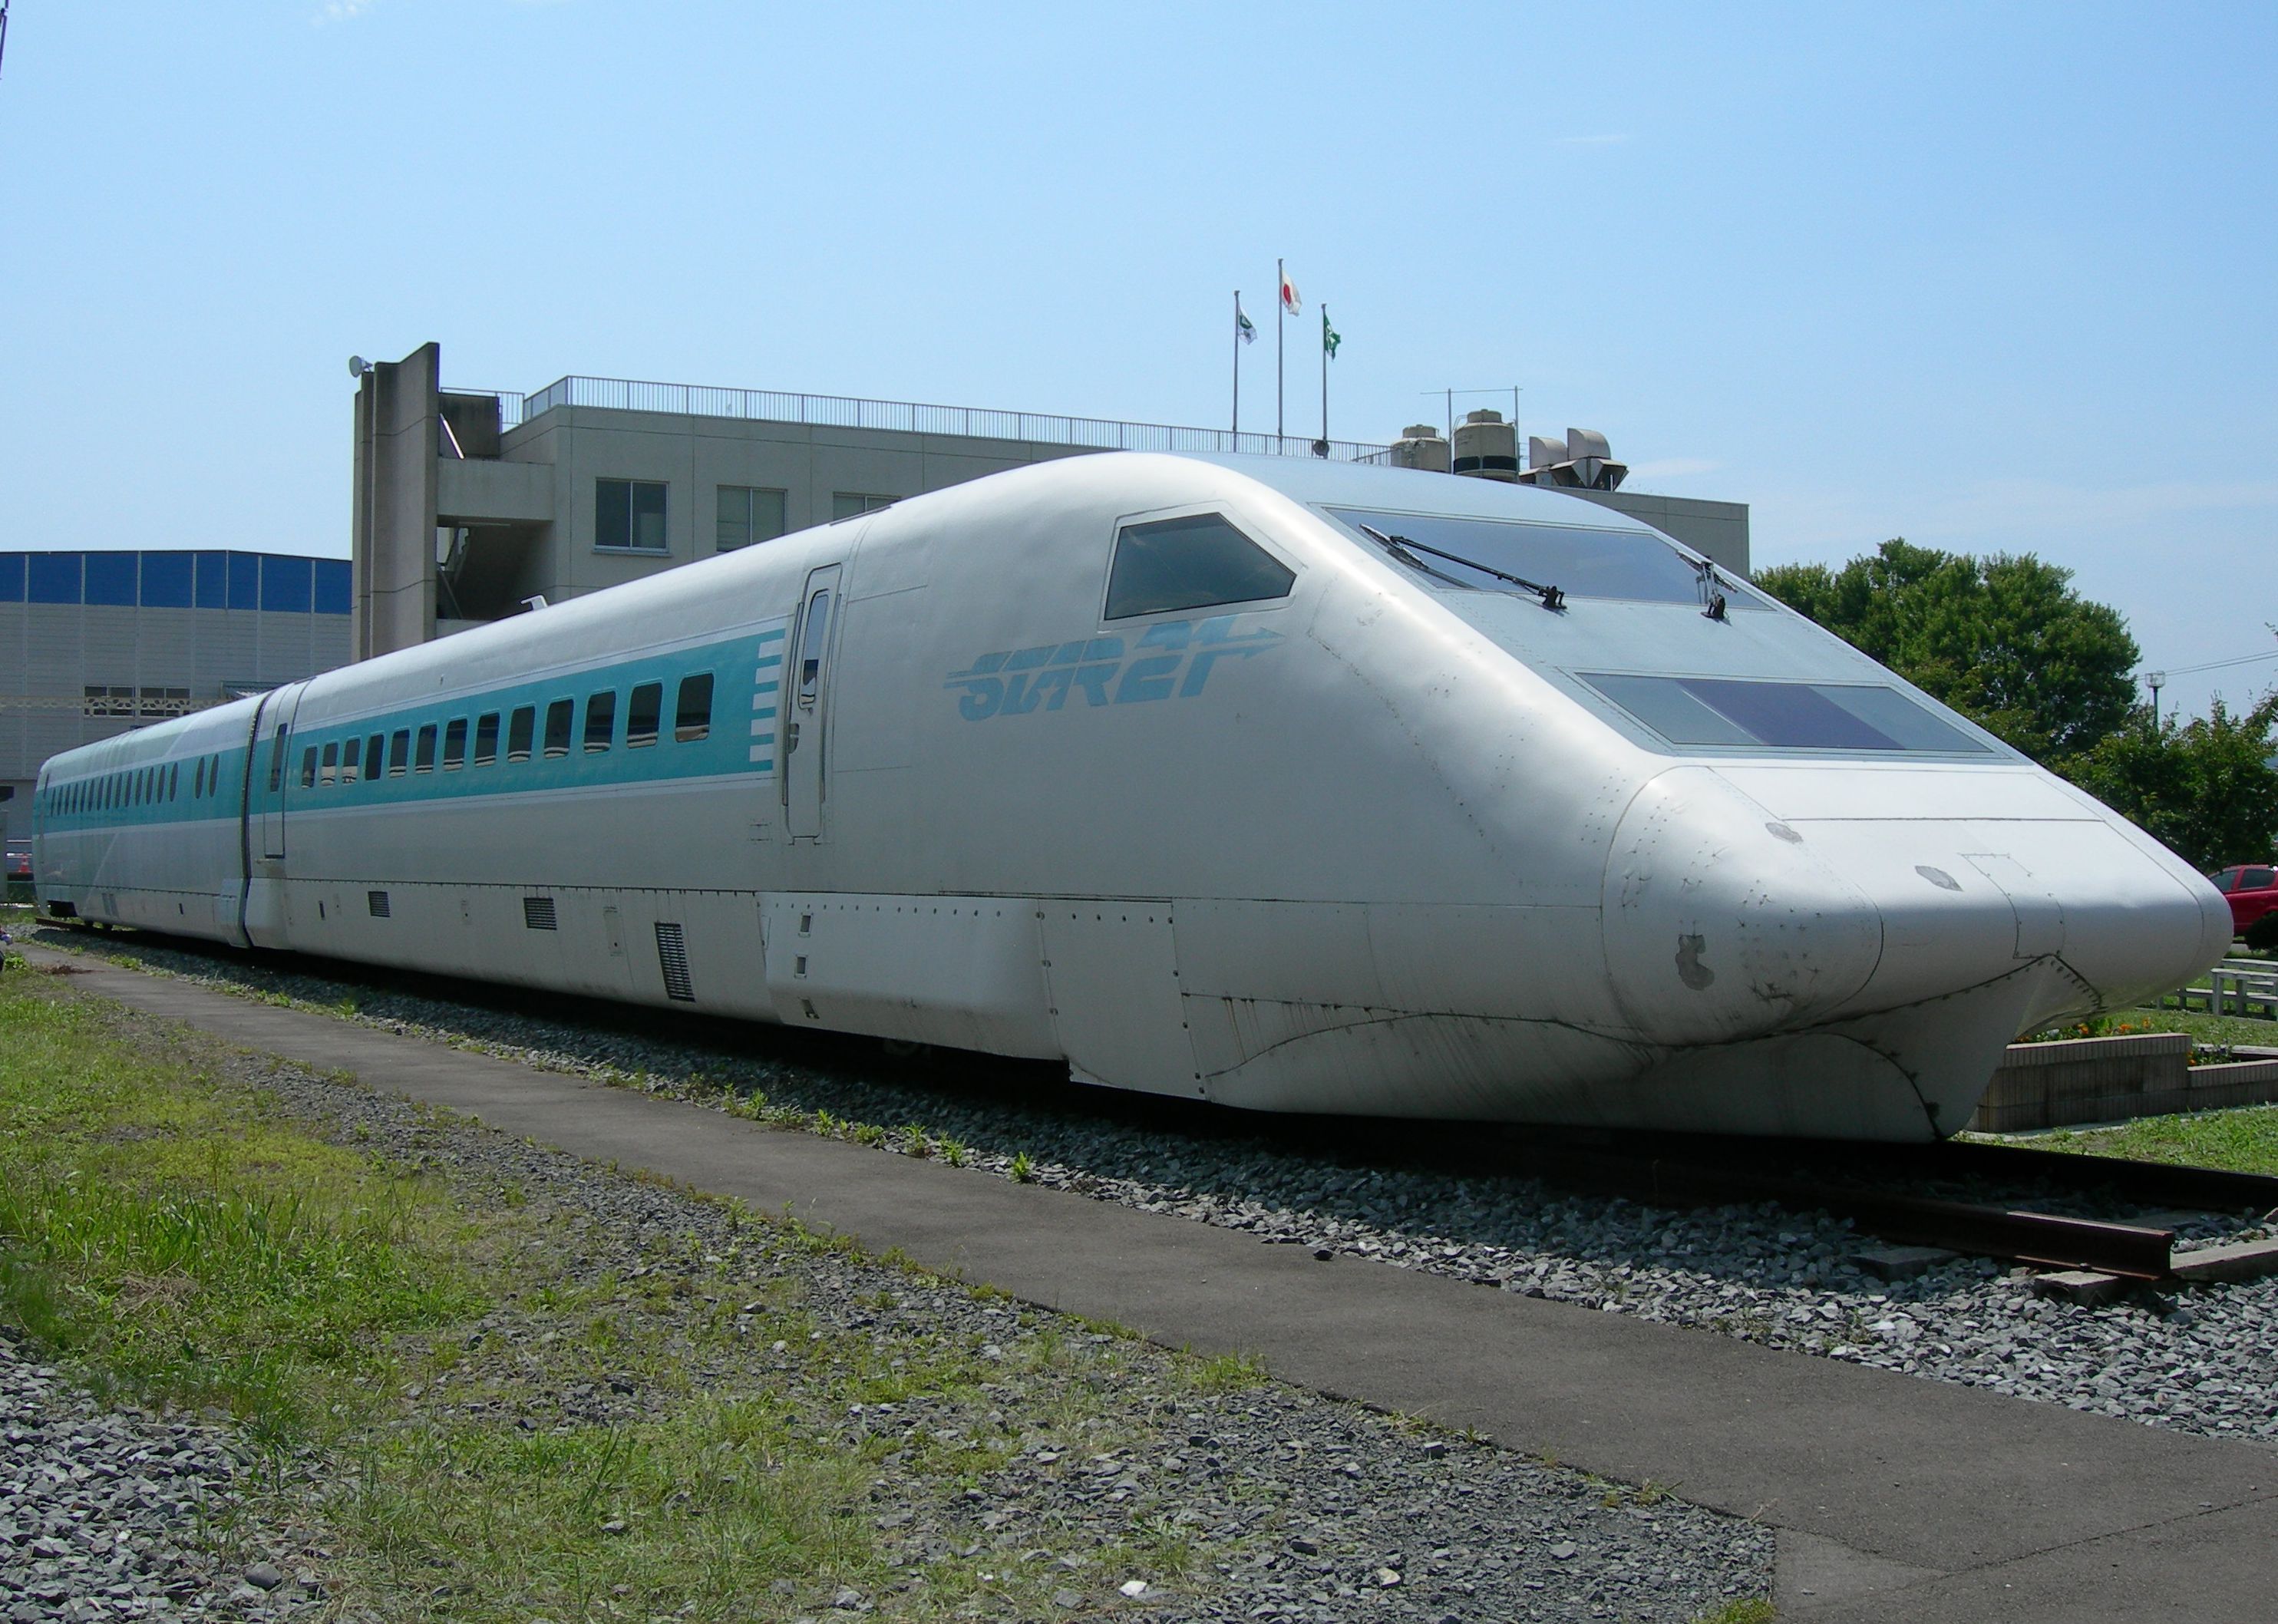 Semi-set of experimental high-speed 953 series (STAR 21) electric train at the Sendai depot